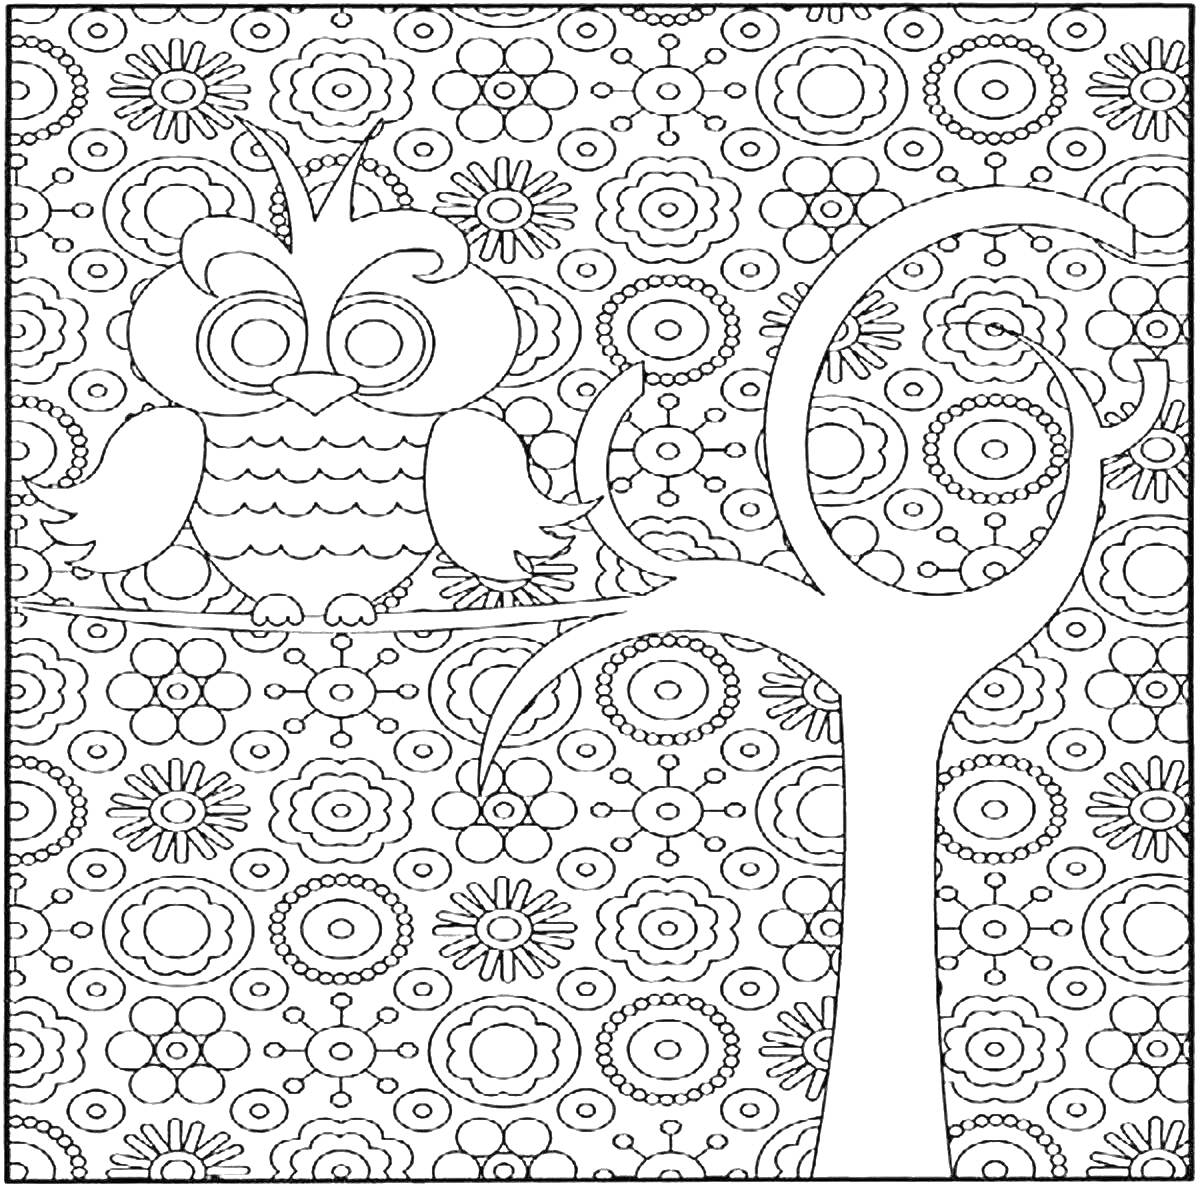 Раскраска Сова на ветке дерева среди цветочного узора